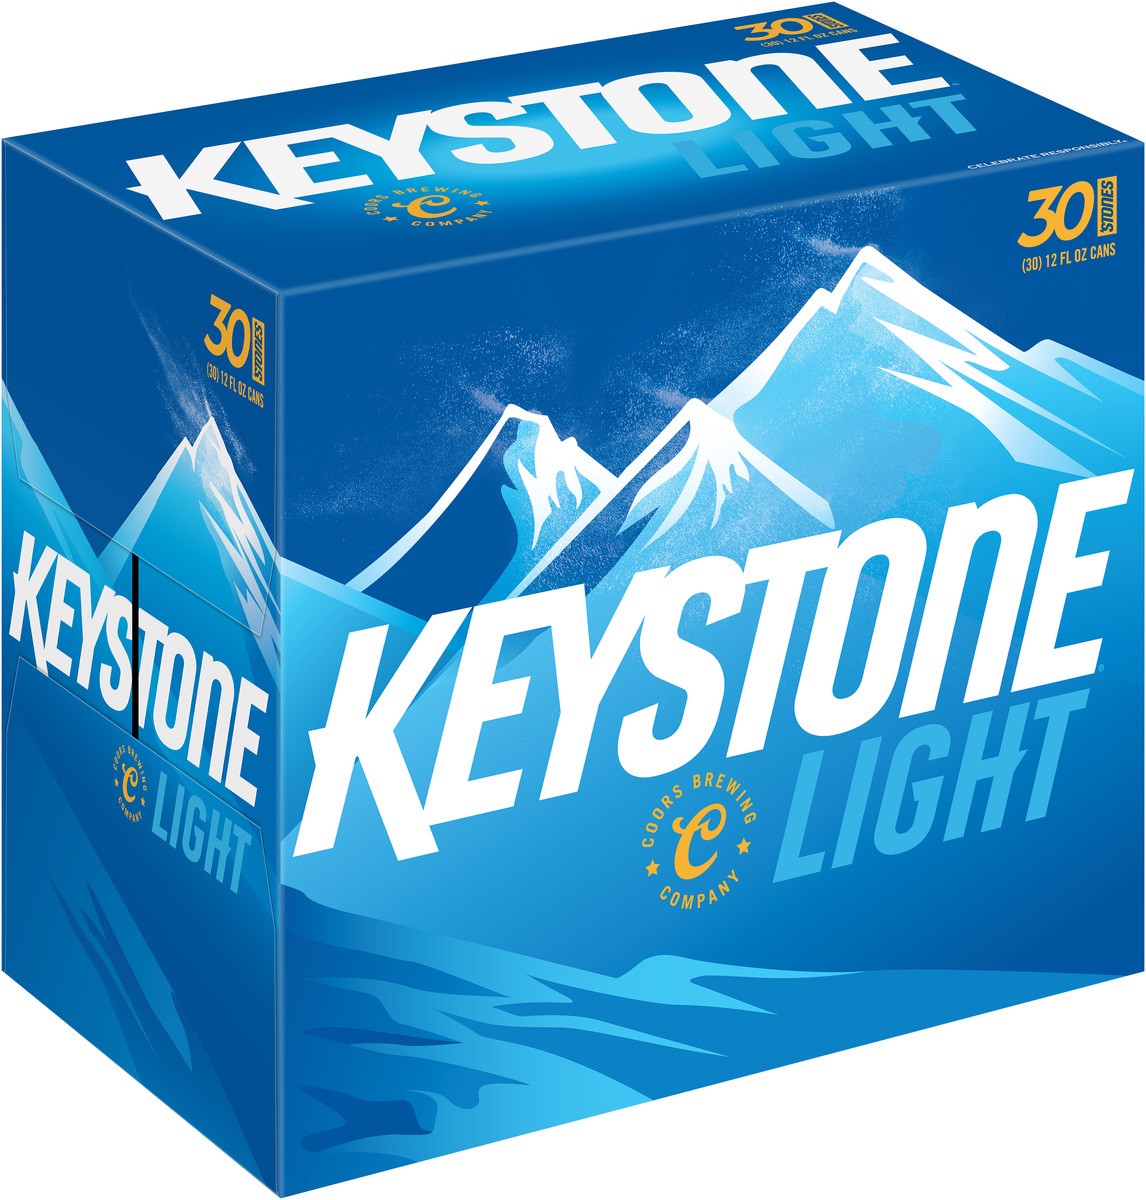 slide 7 of 9, Keystone Light, 12 fl oz